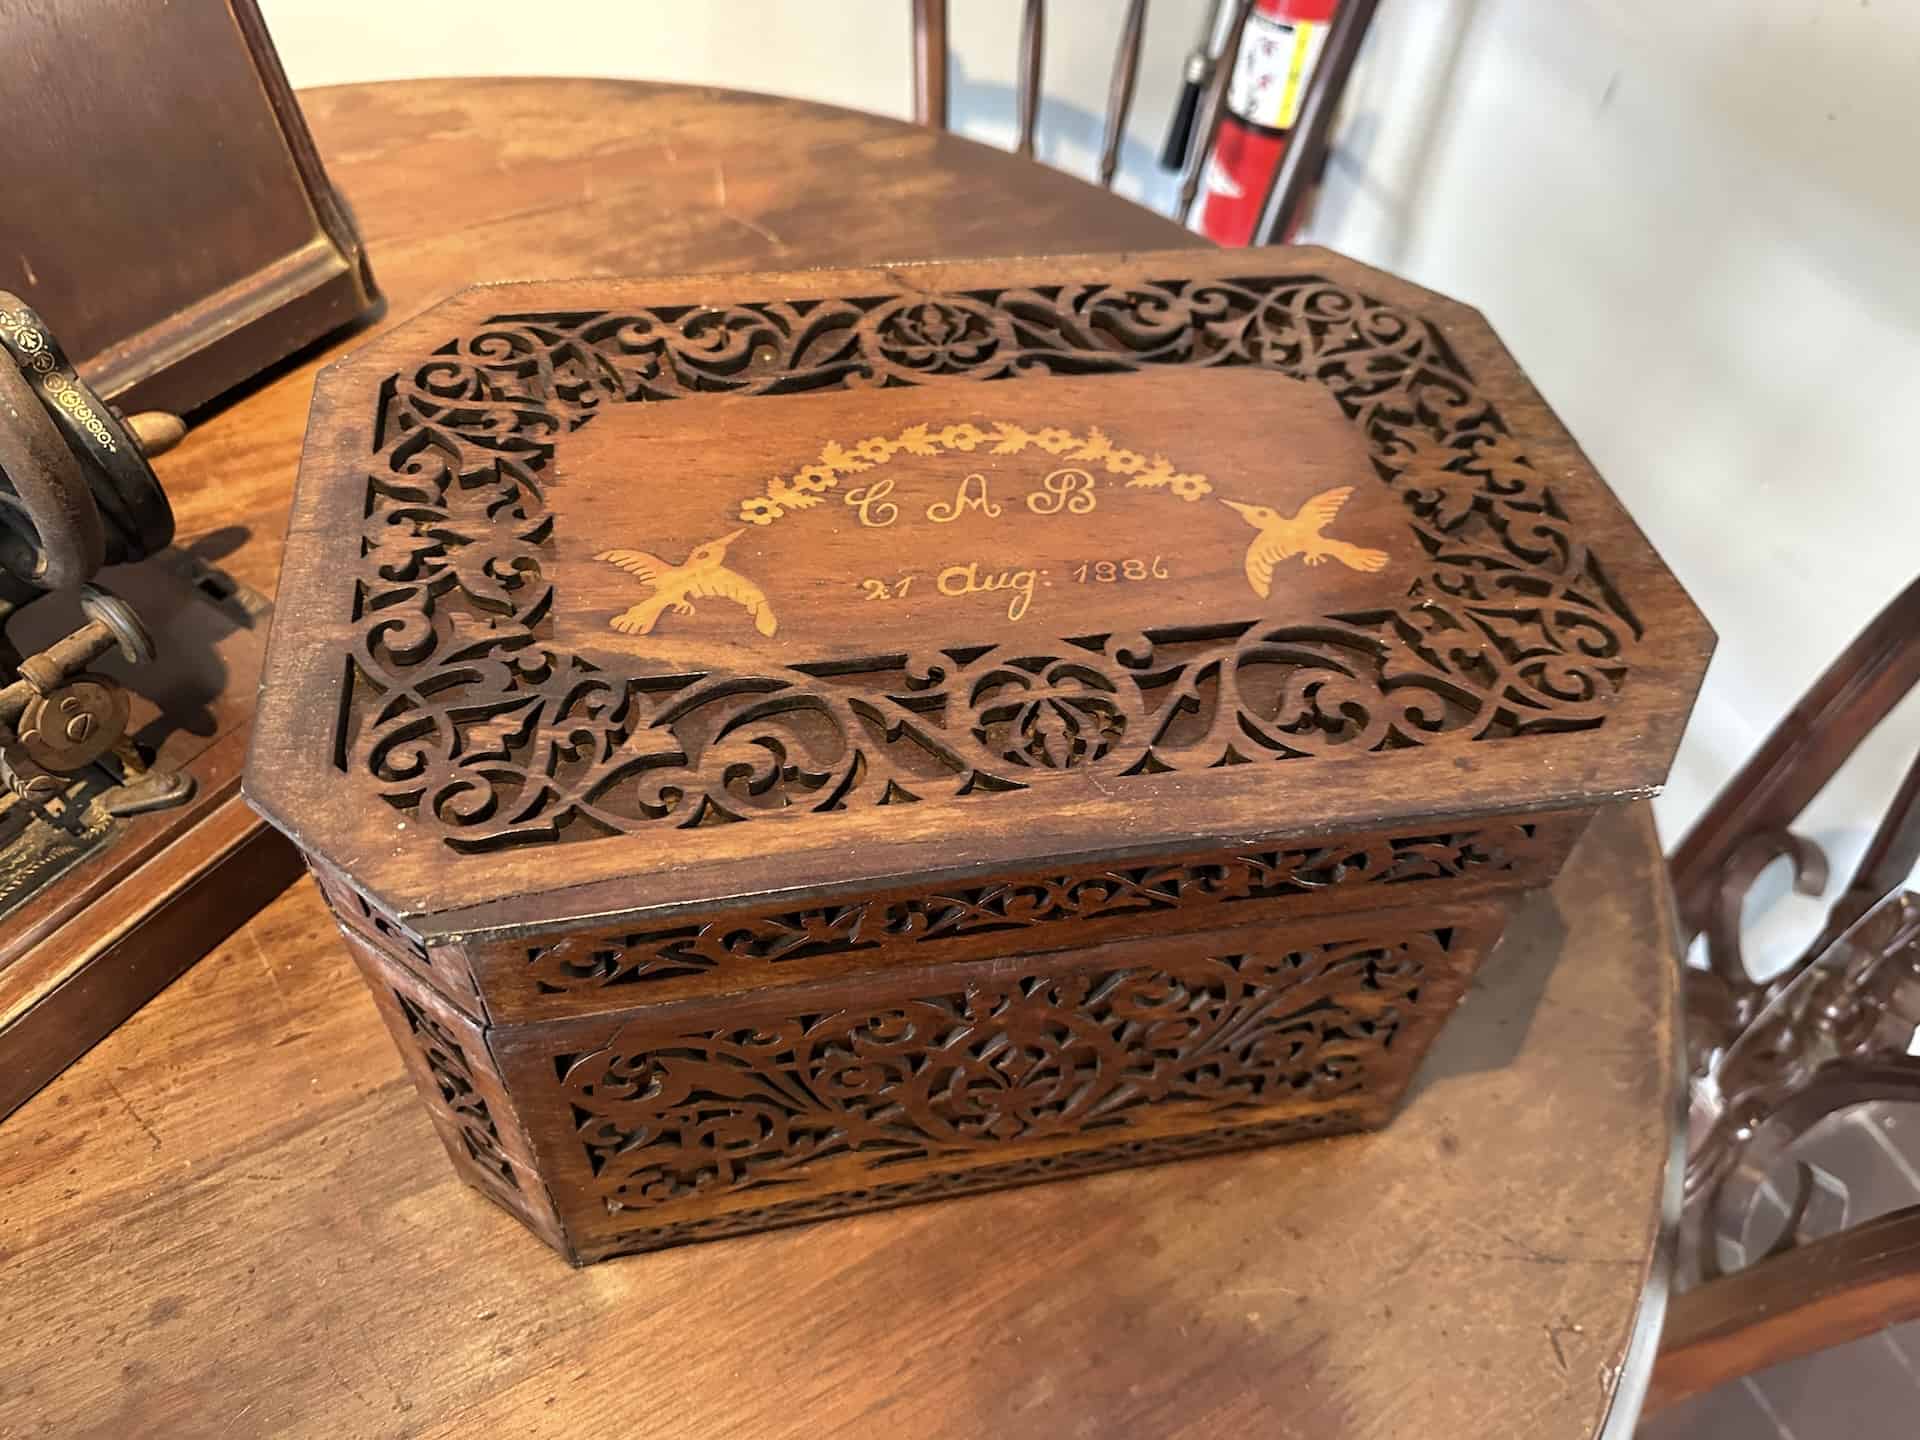 Handmade box at the Historical Museum of Aruba